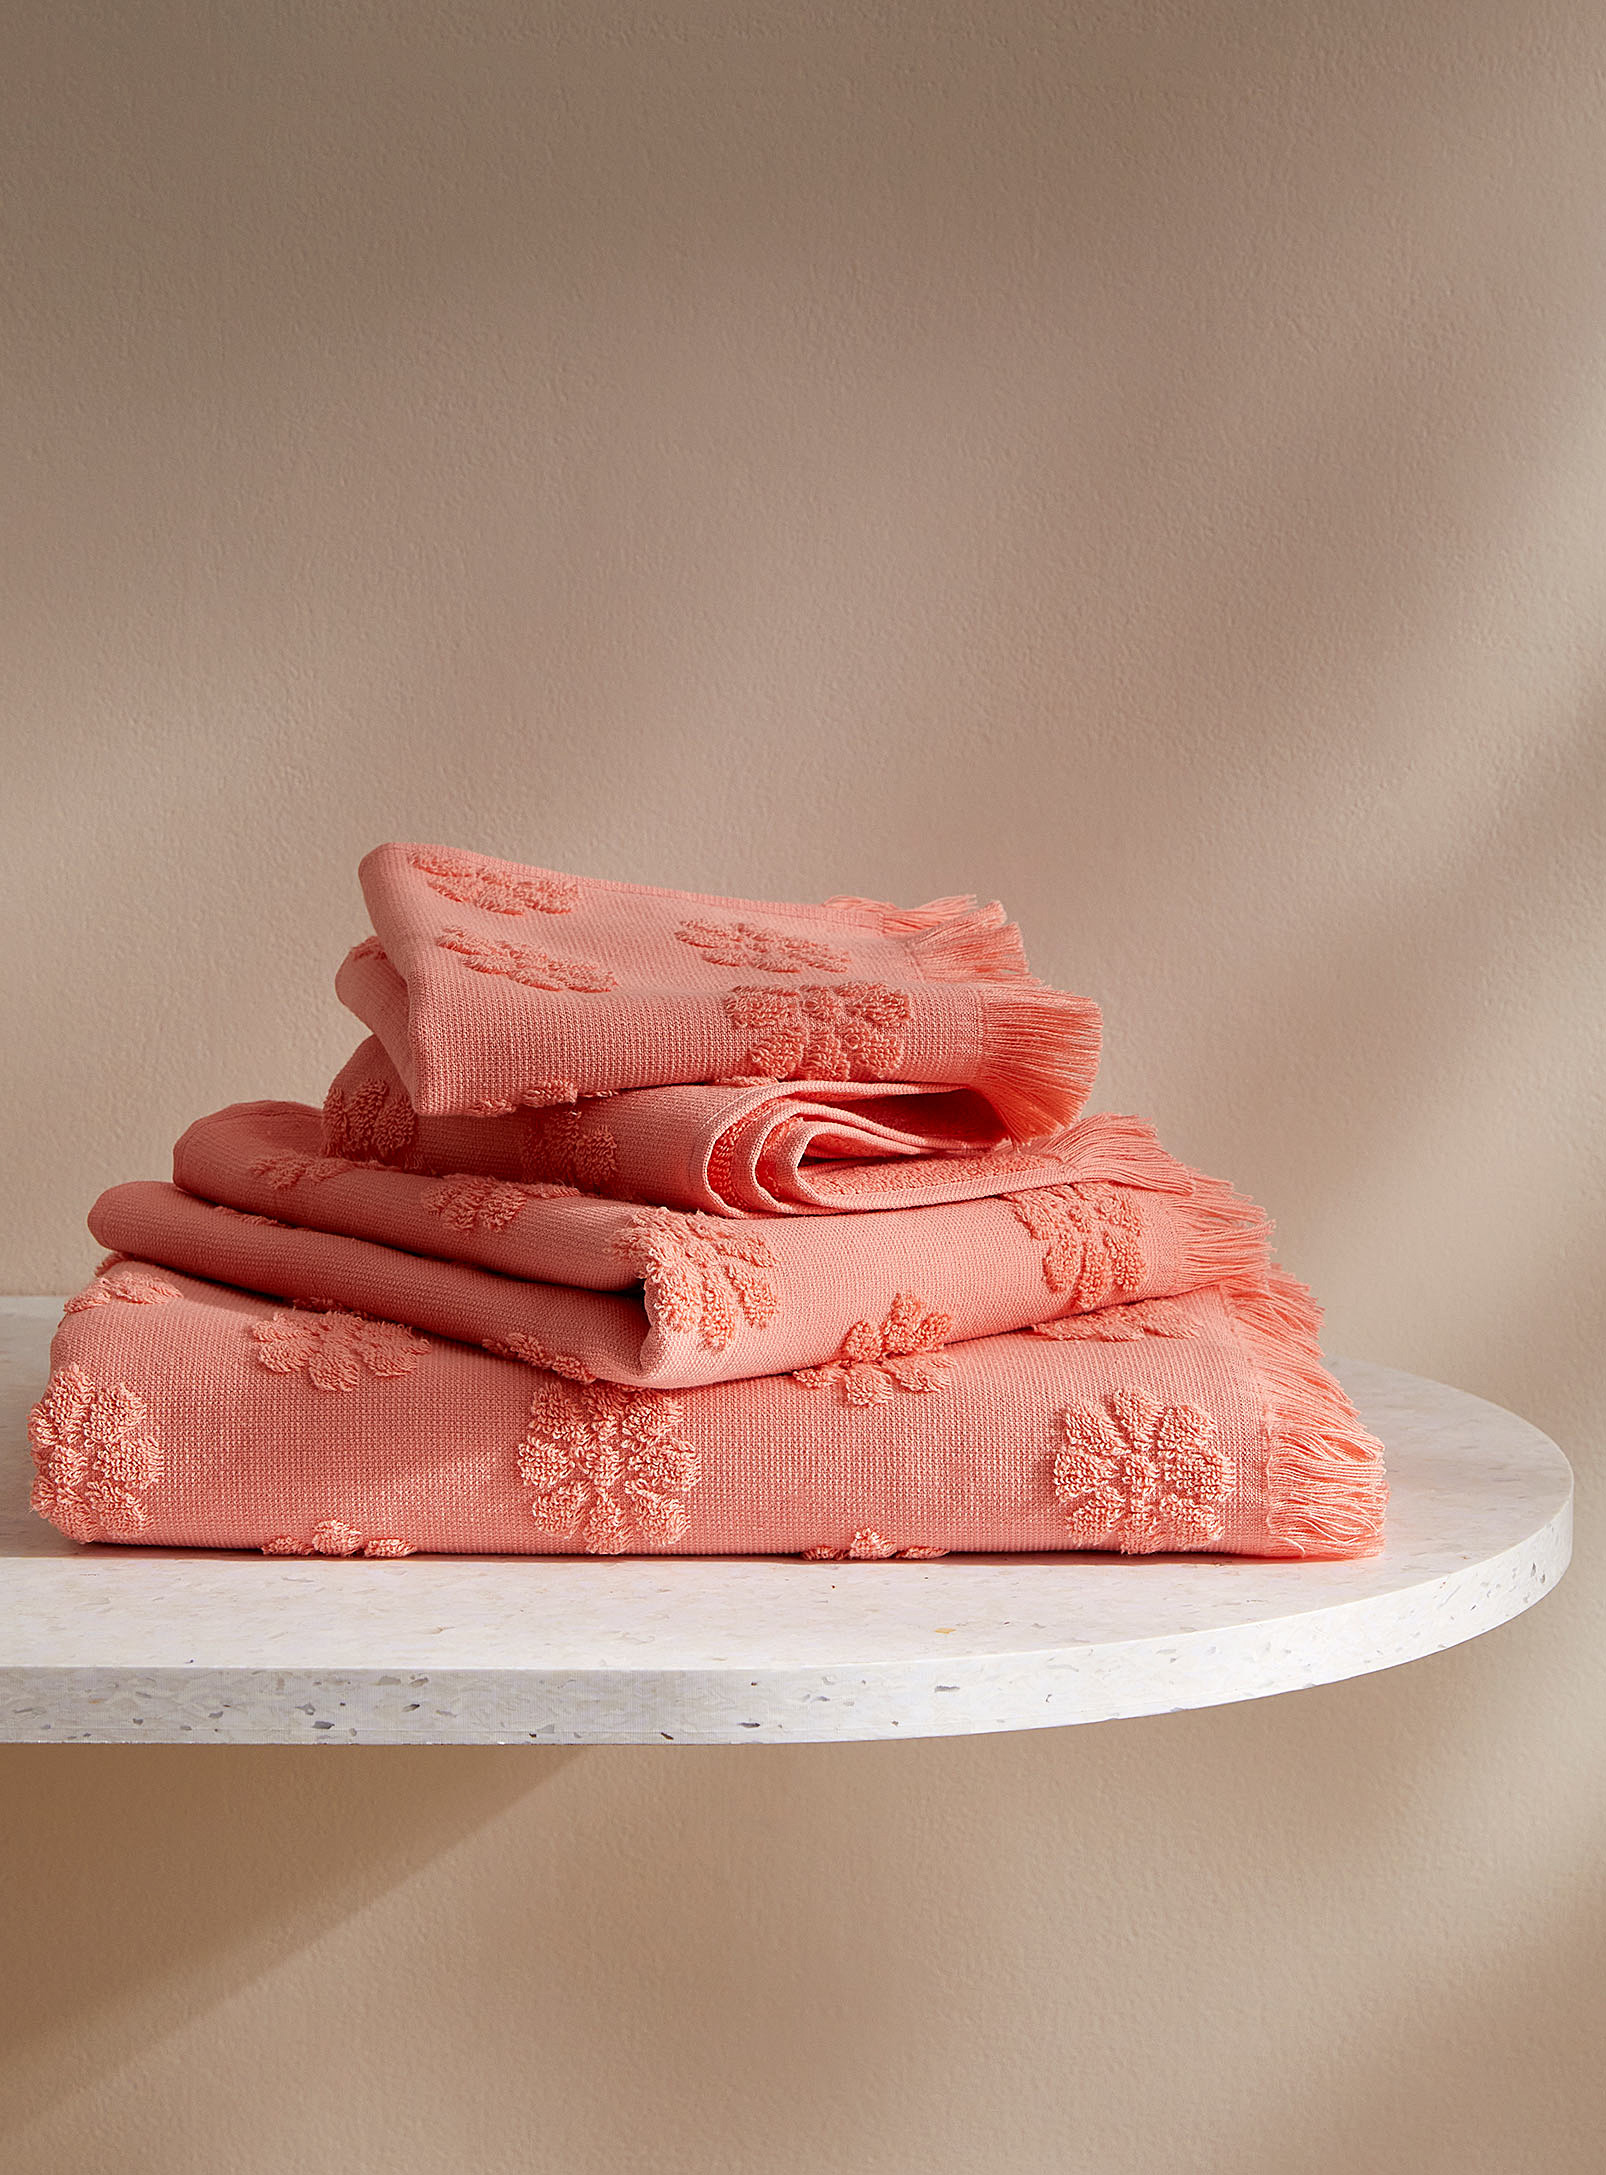 Simons Maison Retro Flowers Organic Cotton Jacquard Towels In Pink